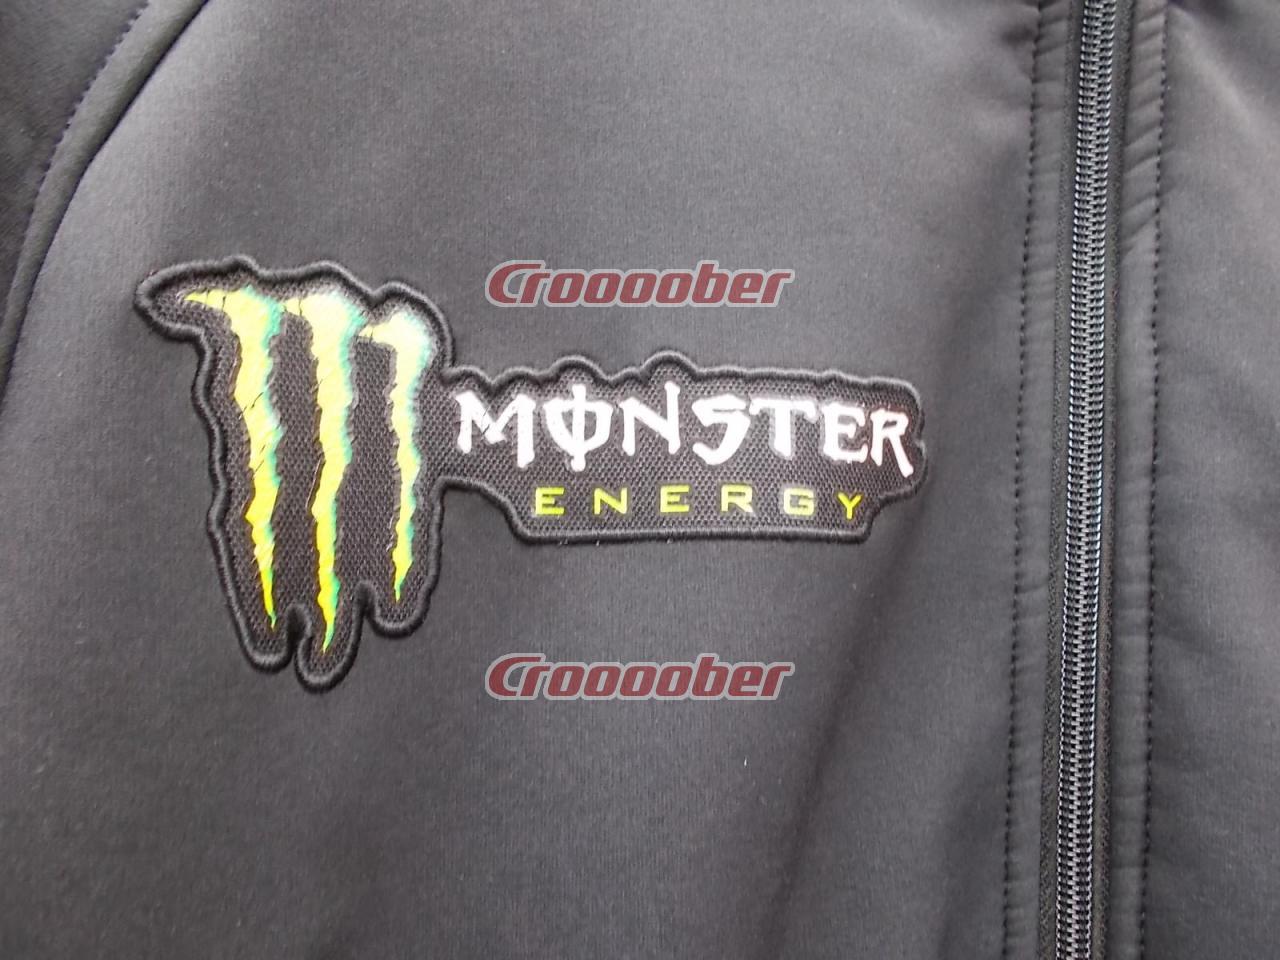 Size: L Alpinestars X Monster Energy Soft Shell Parka Jacket